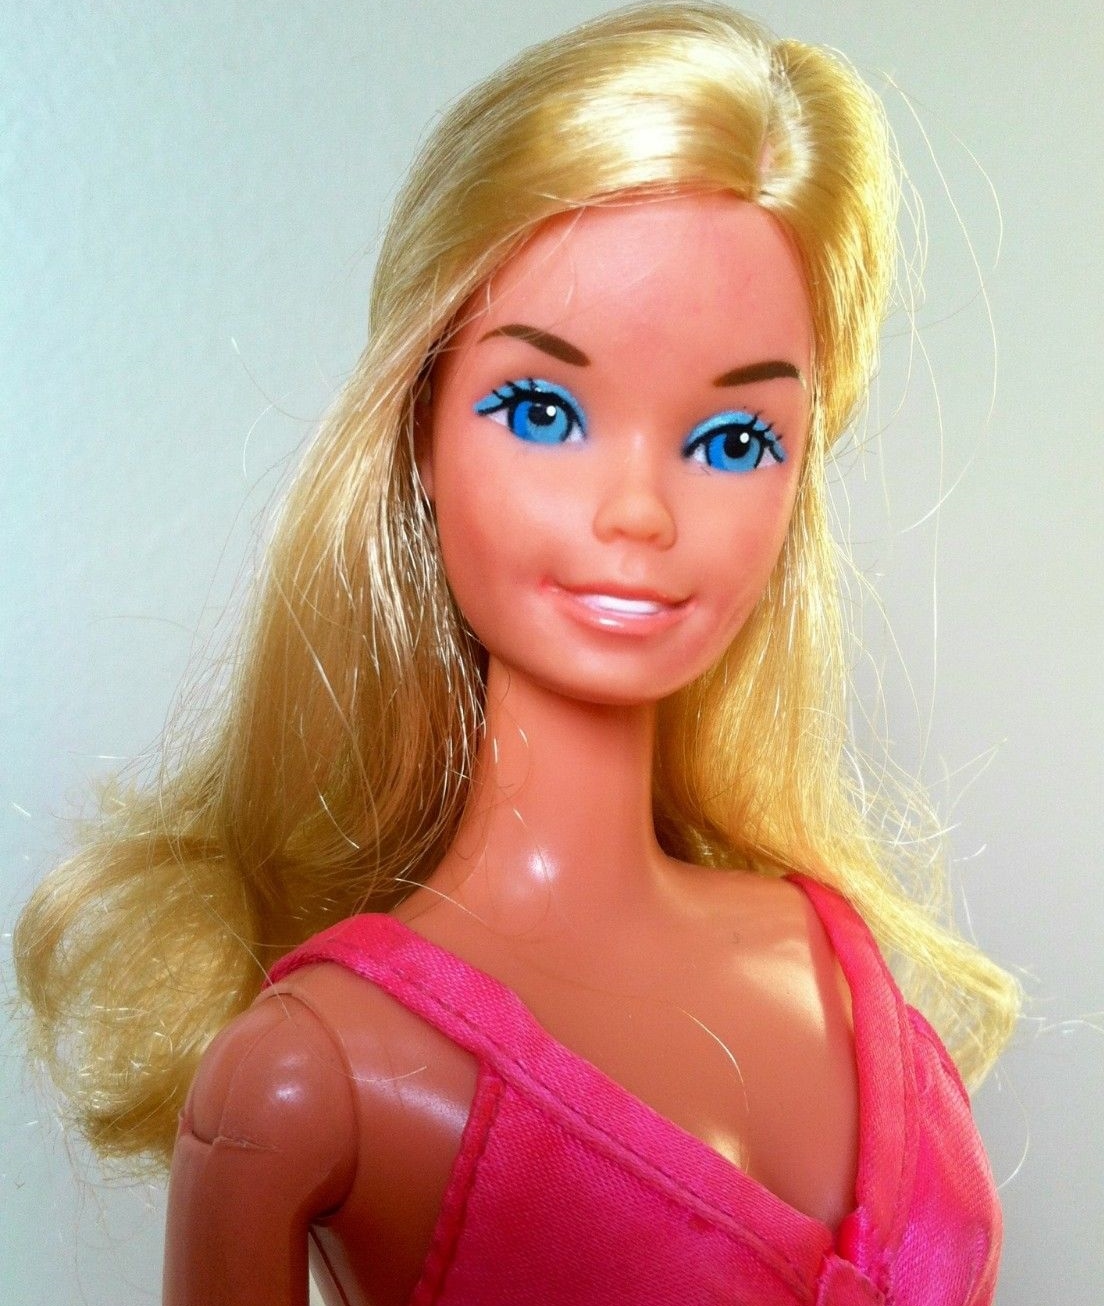 superstar barbie 1977